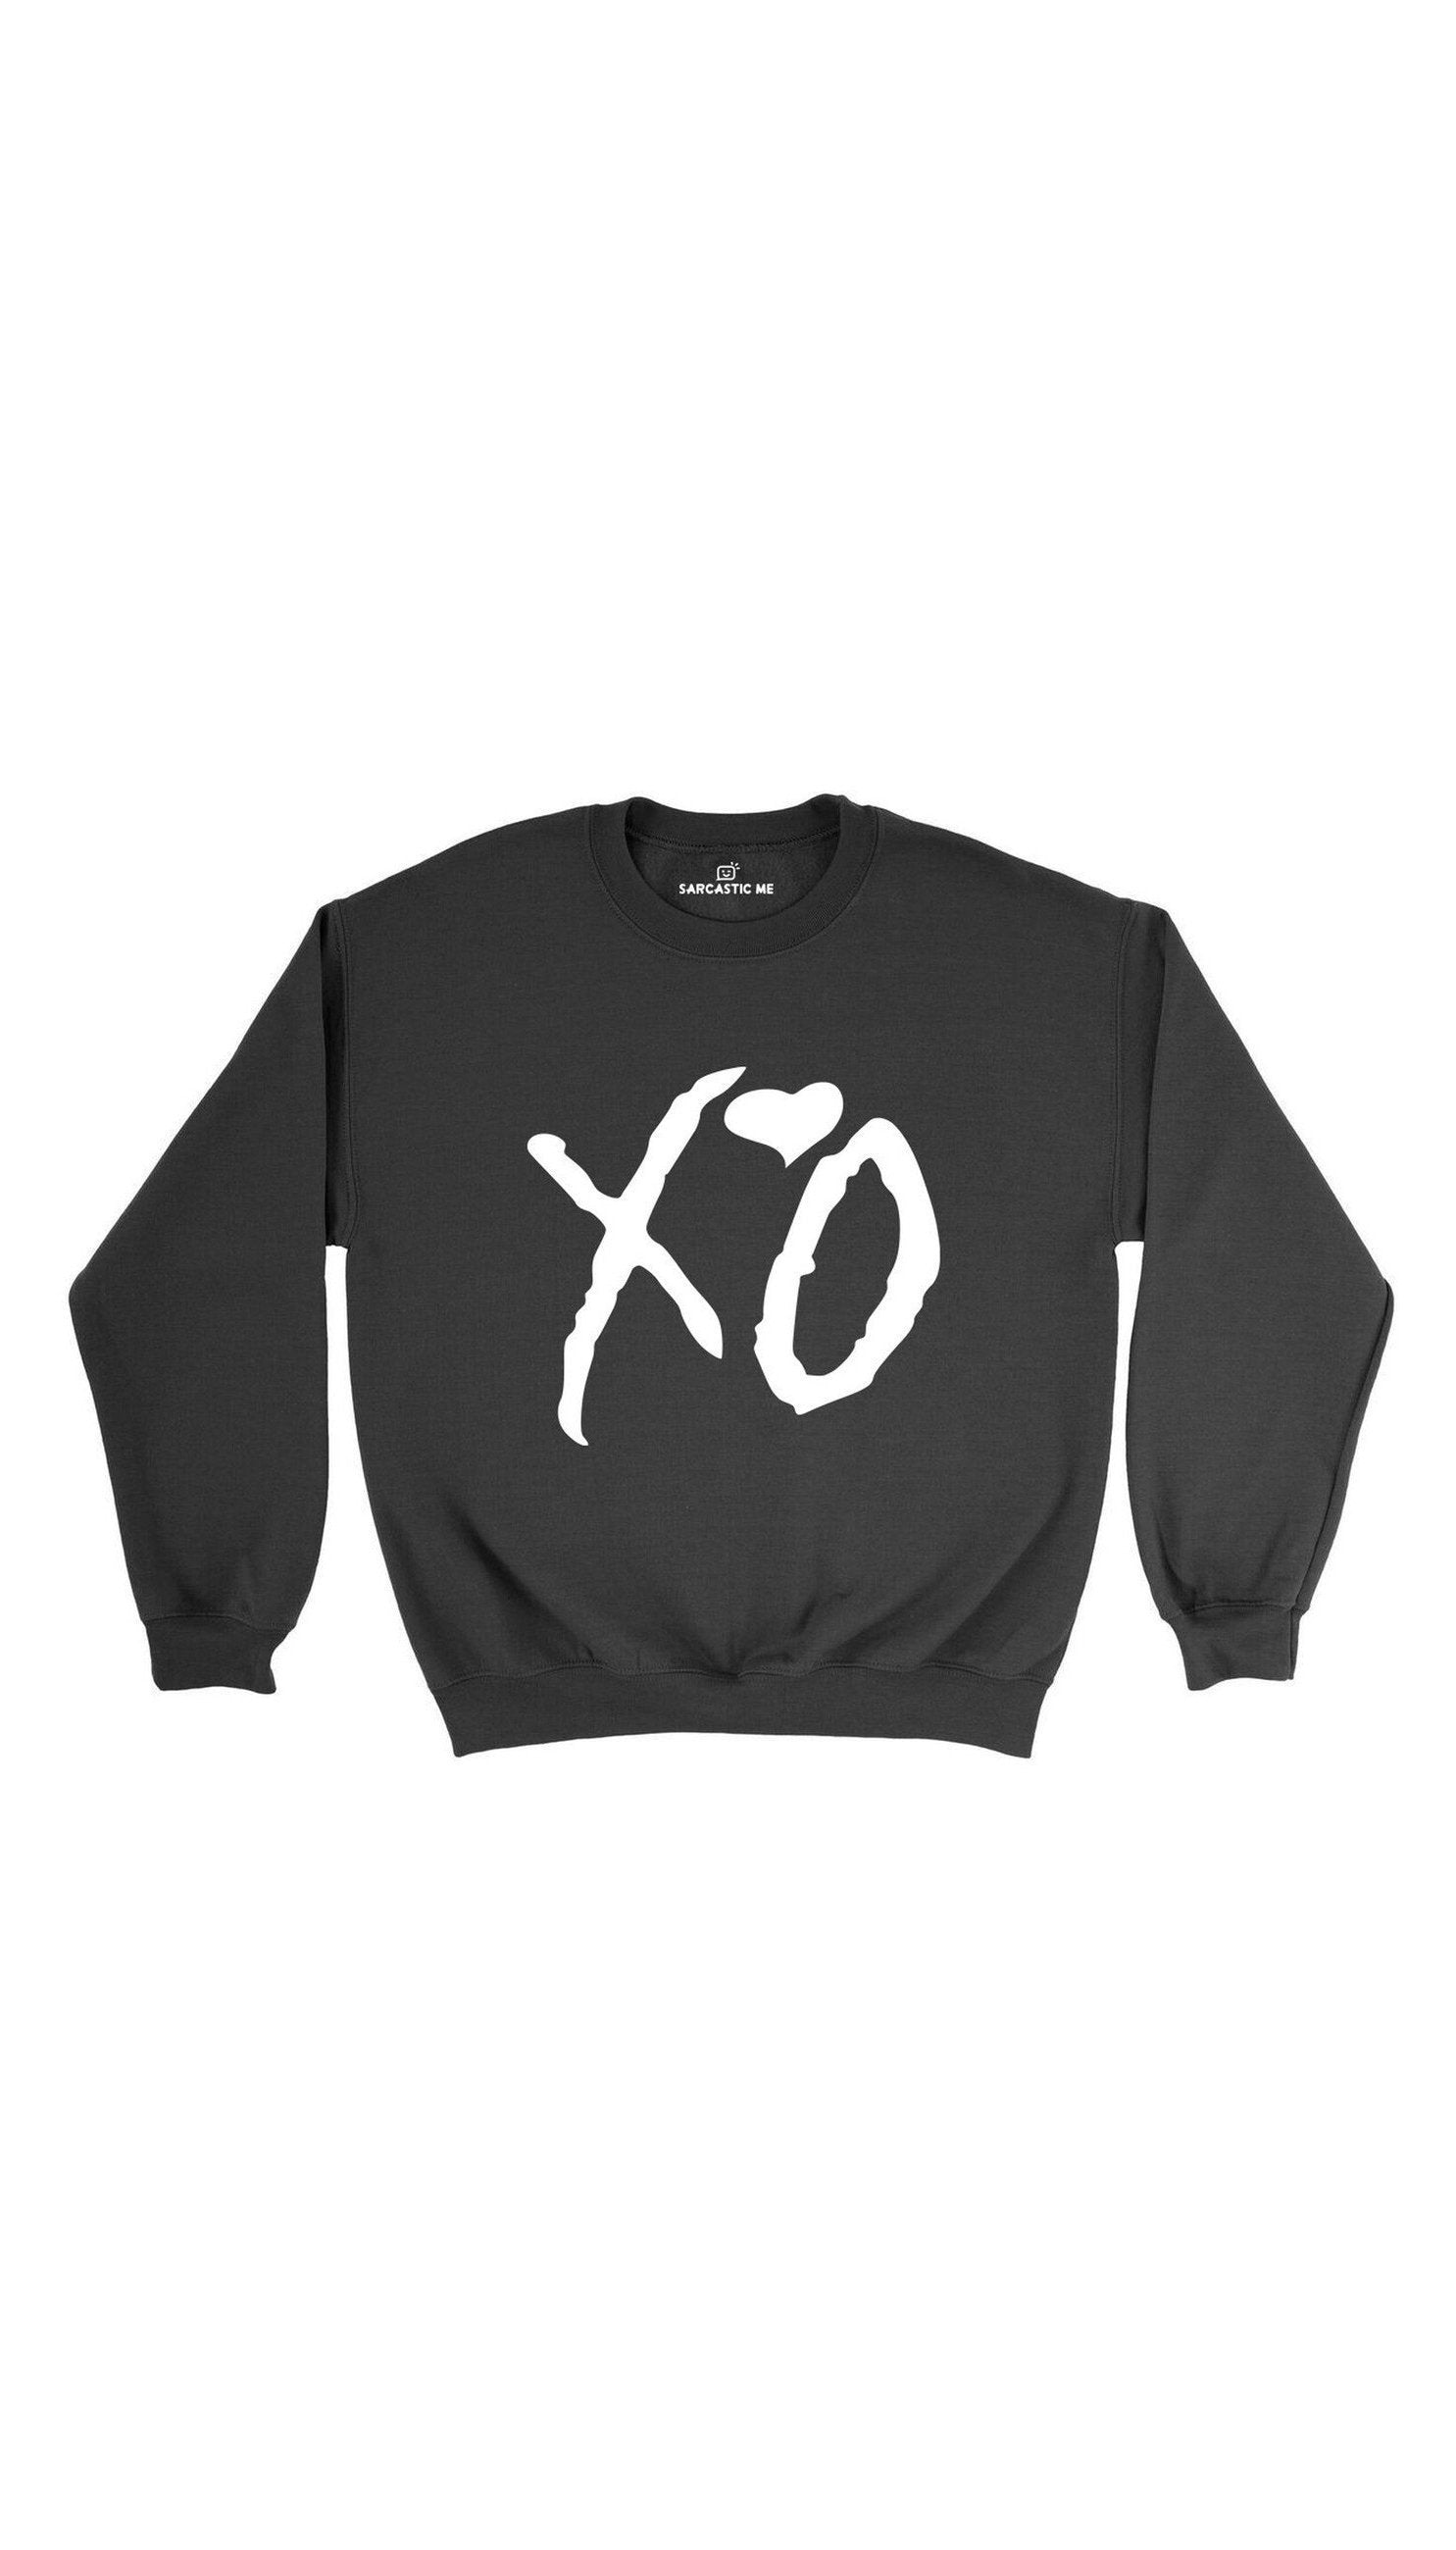 XO Black Unisex Pullover Sweatshirt | Sarcastic Me